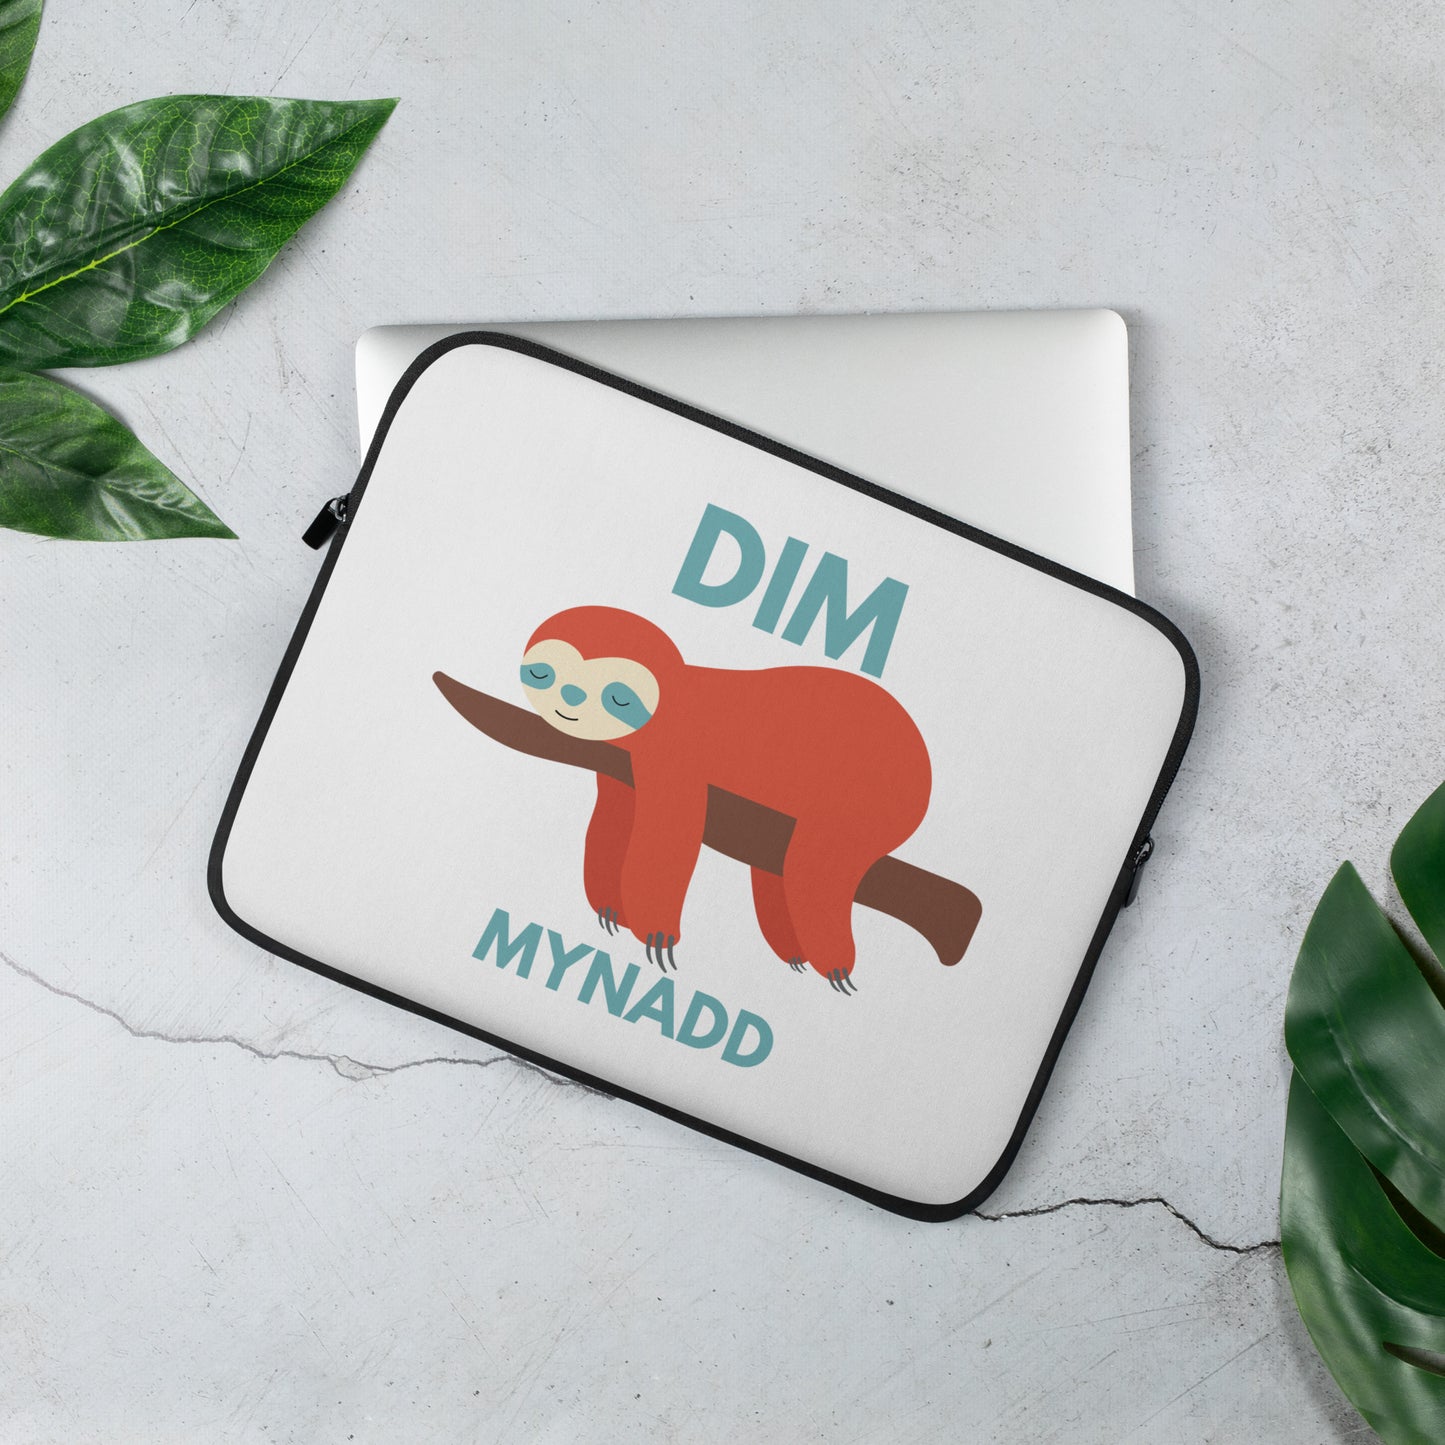 Dim Mynadd - Laptop Sleeve